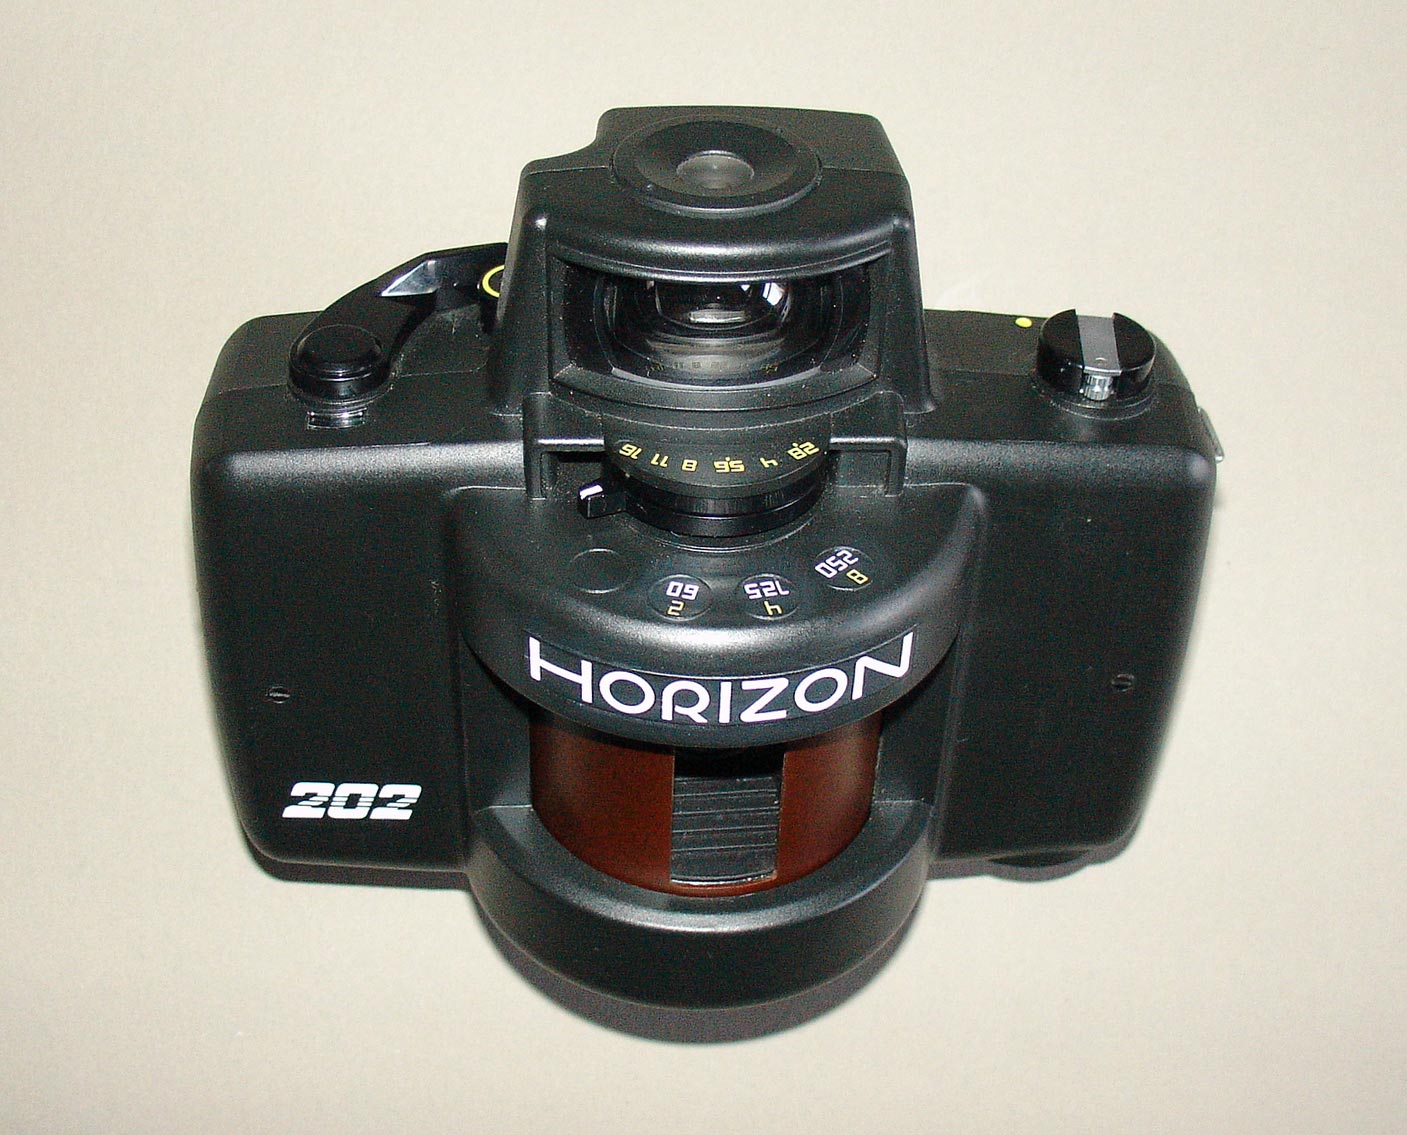 Đang tải Horizon202.jpg…